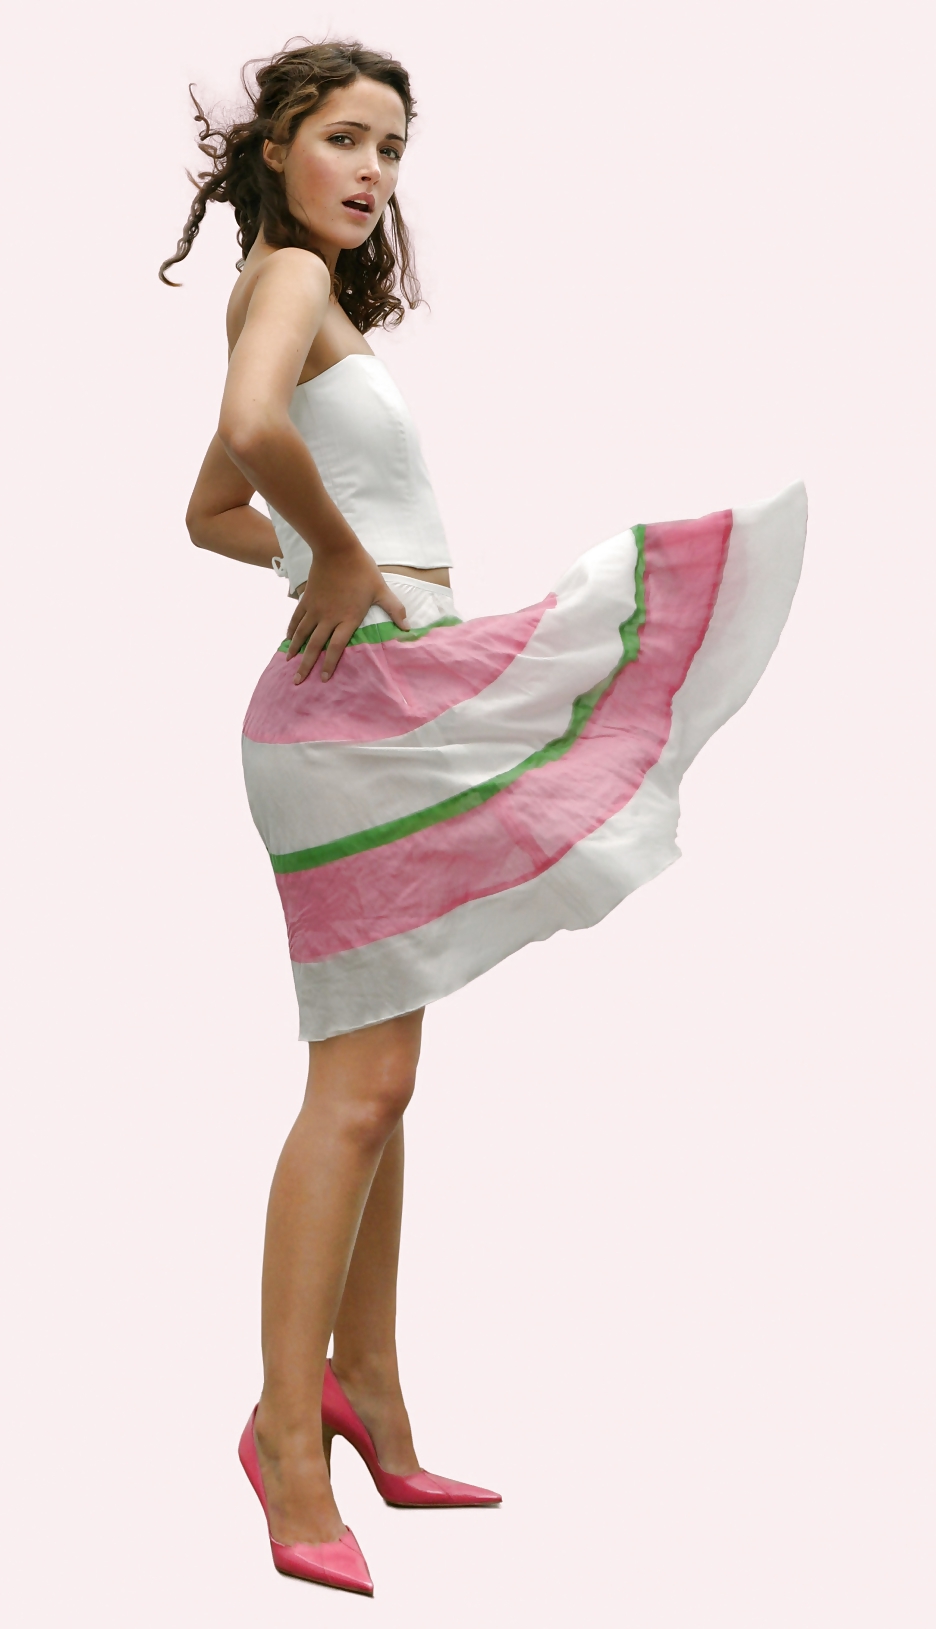 Rose Byrne, bella attrice con gambe sexy
 #20508102